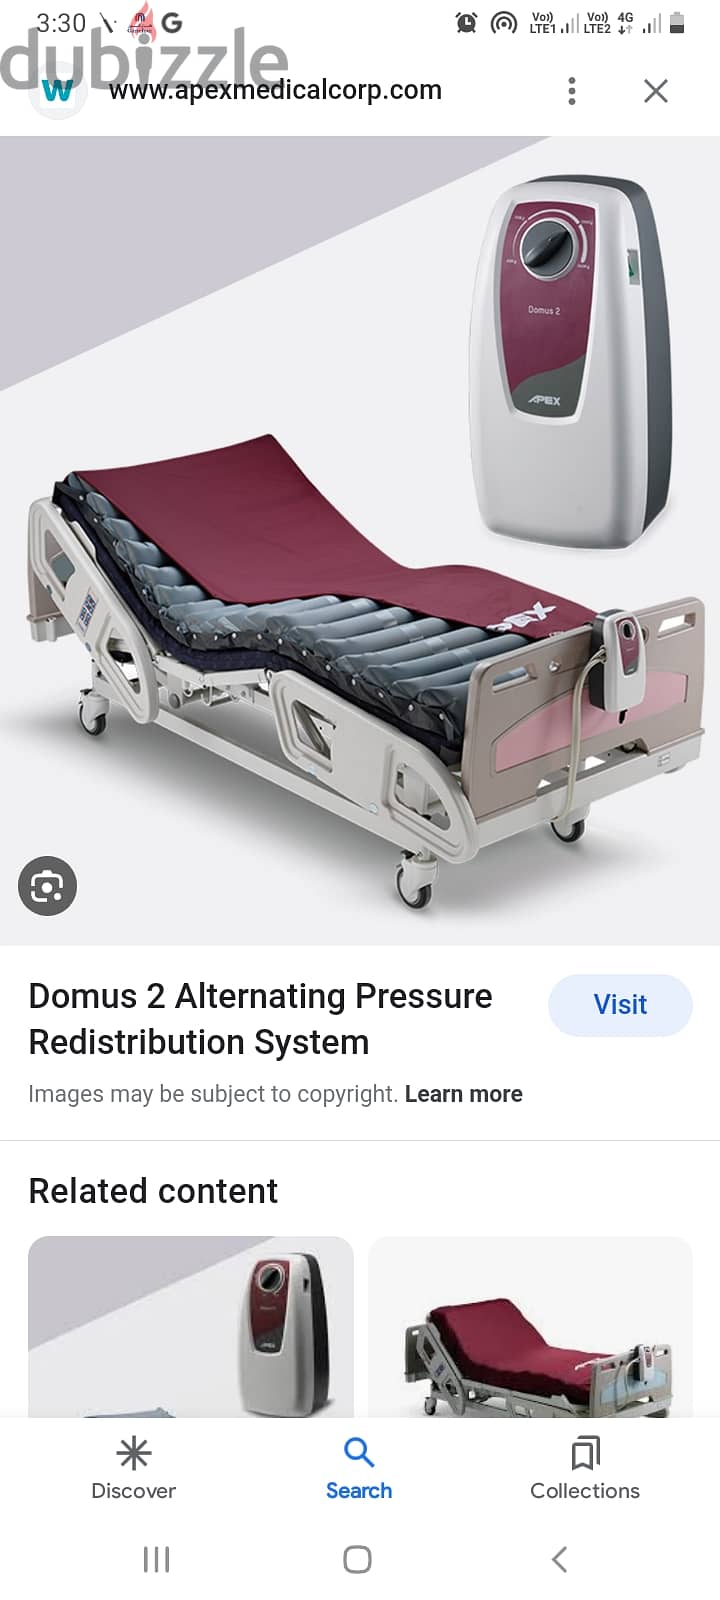 Medicated Pressure Redistribution system for bed ridden patients 0